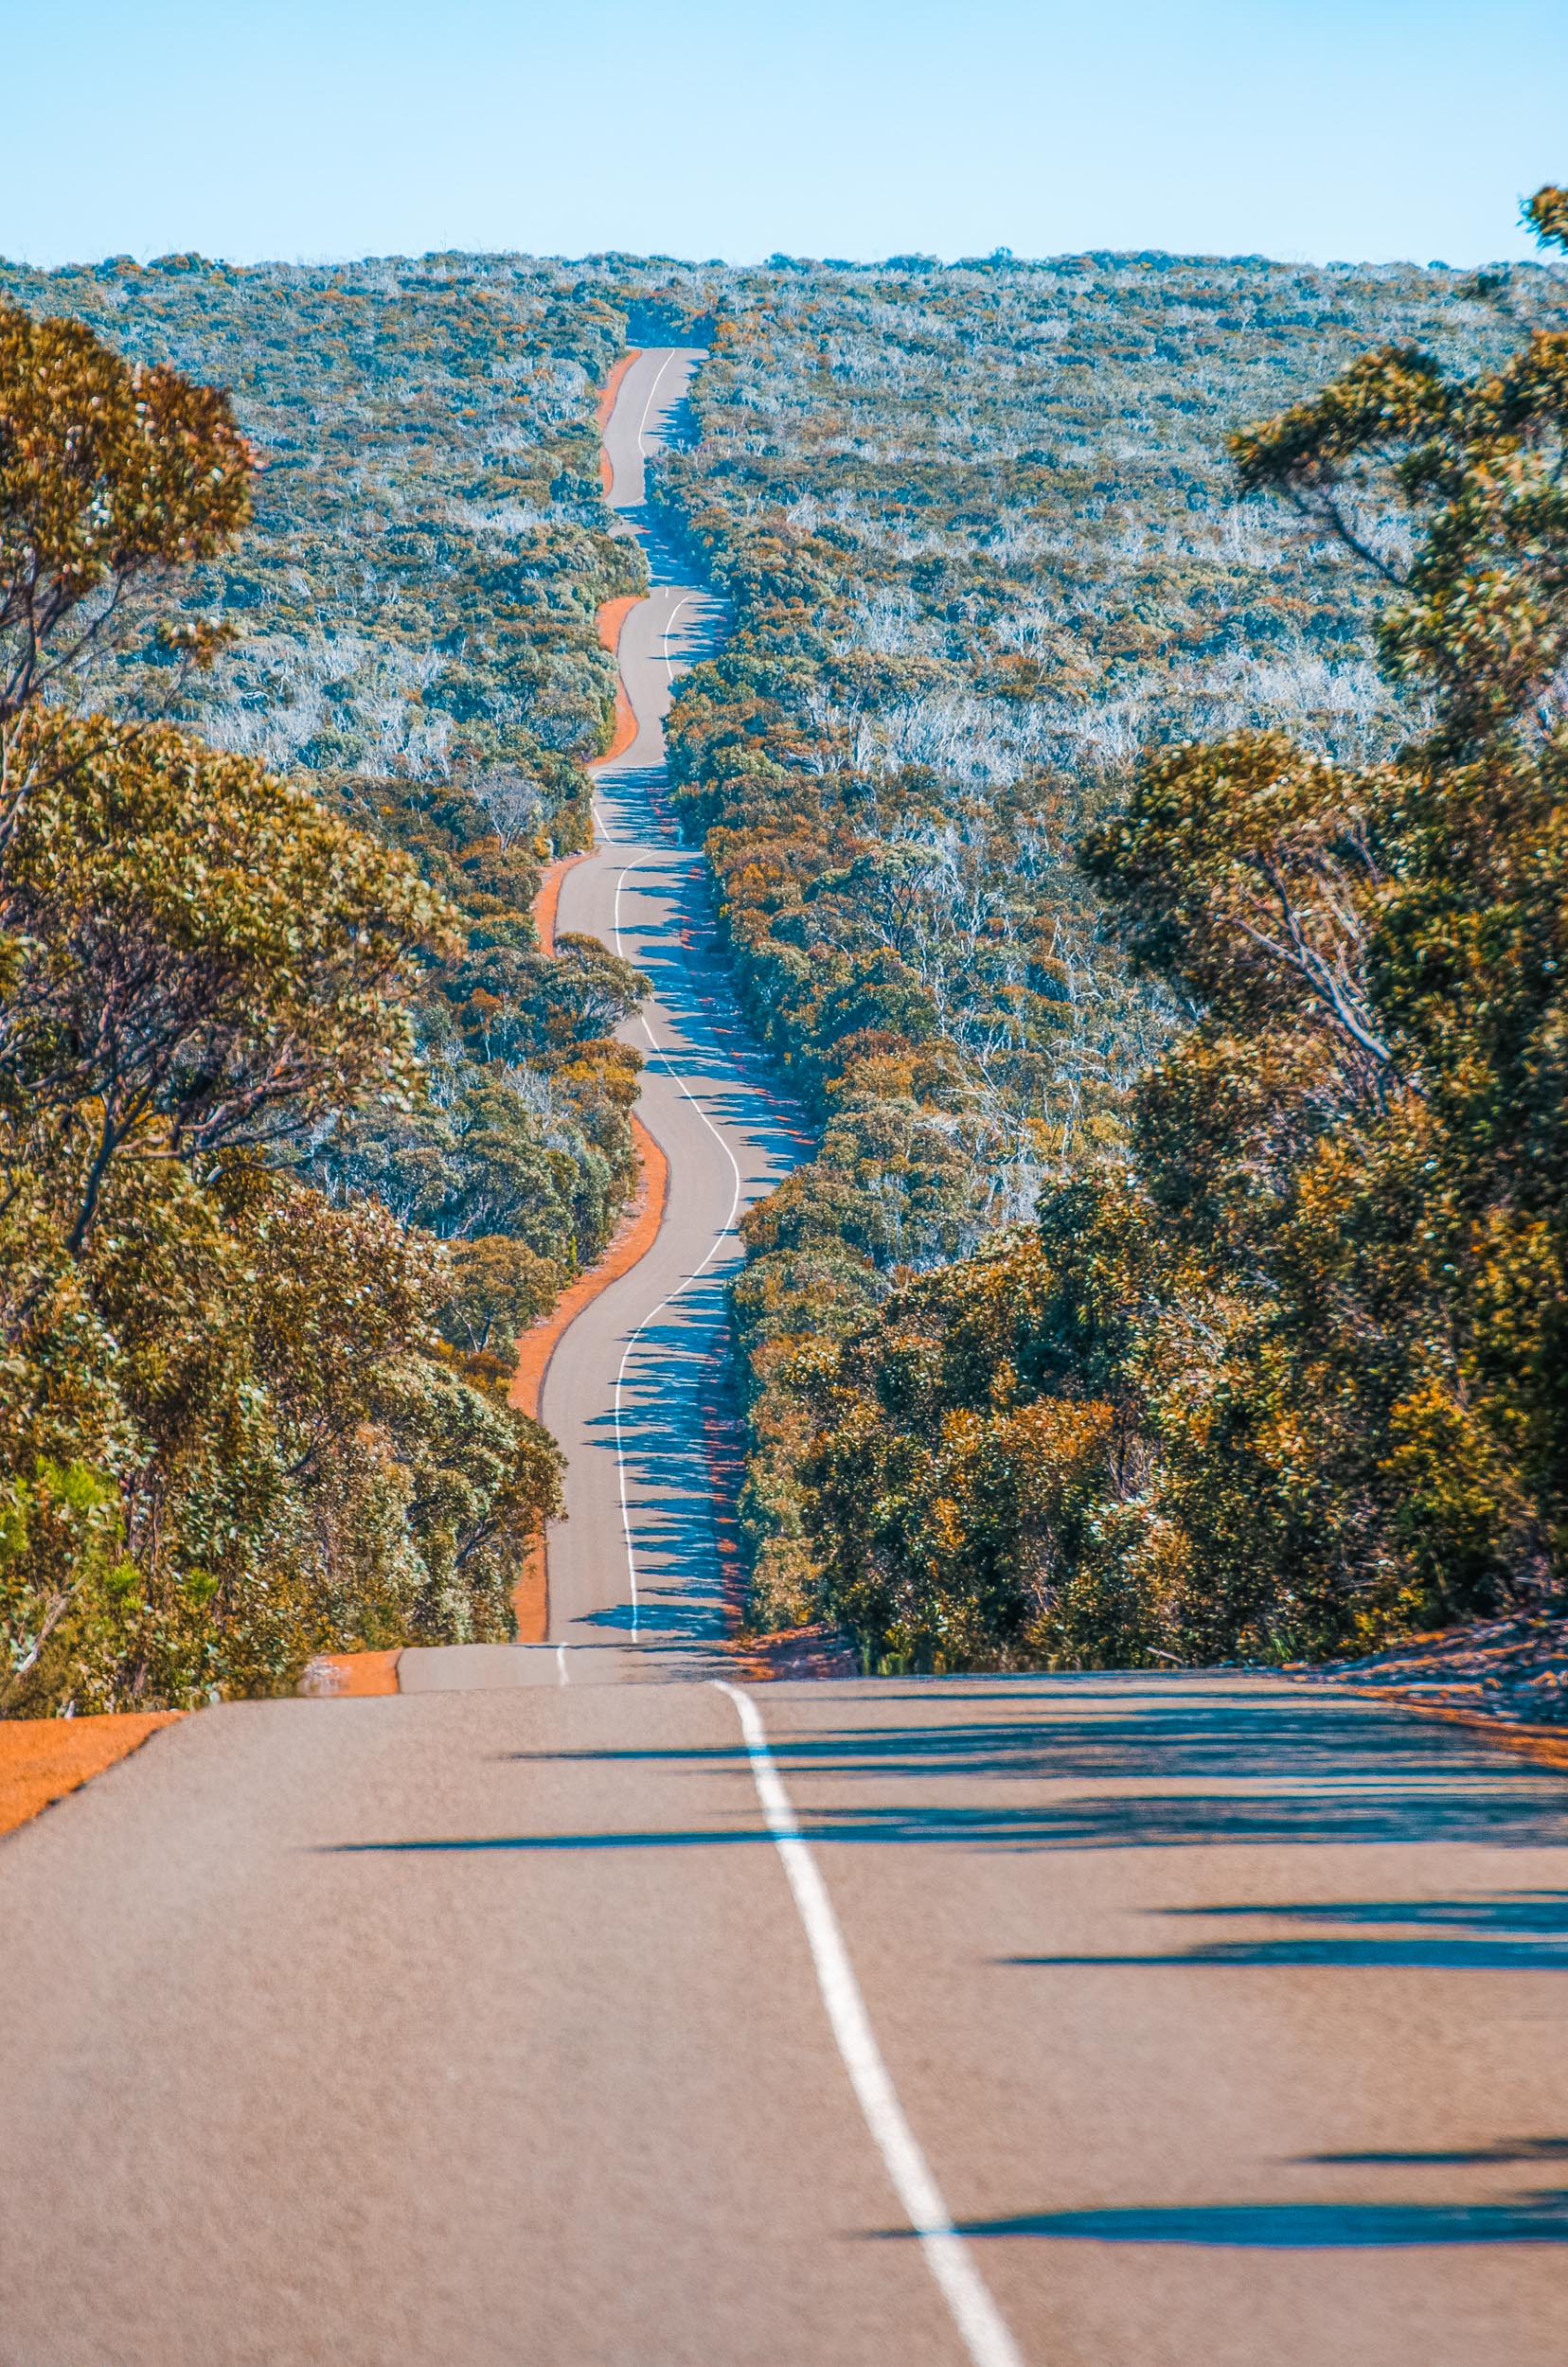 kangaroo island curved road road trip perth-melbourne